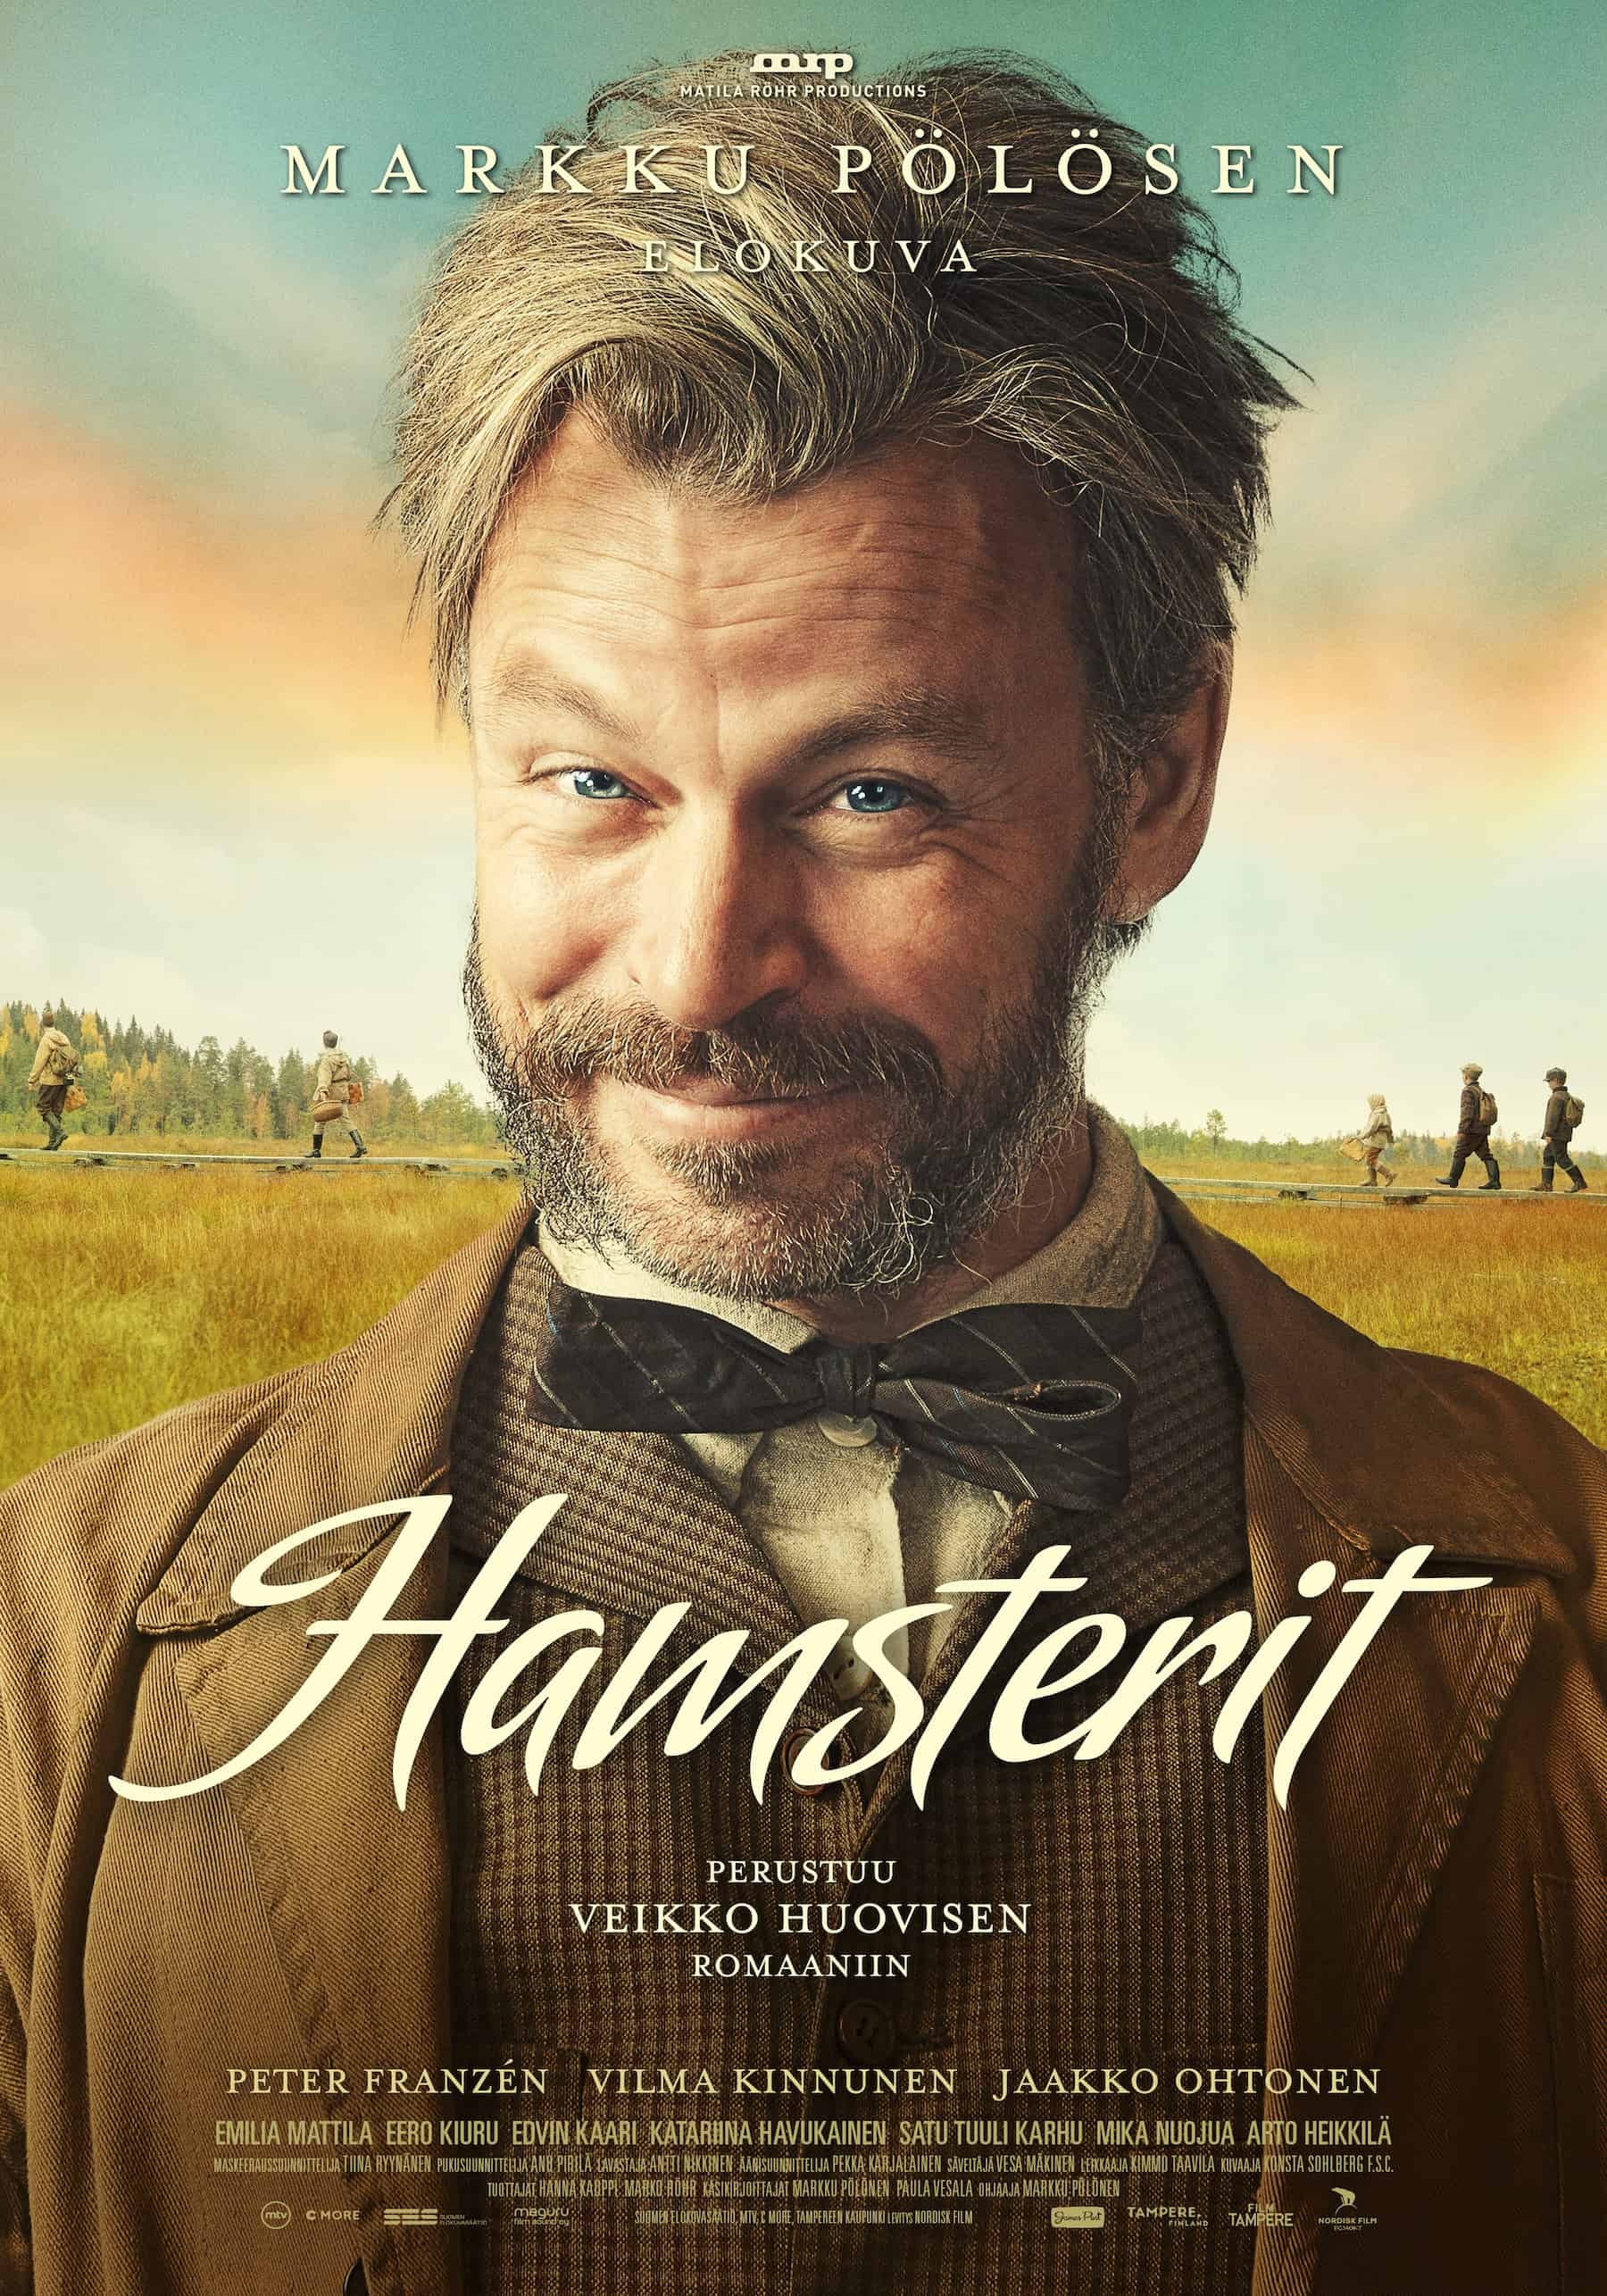 Mega Sized Movie Poster Image for Hamsterit 